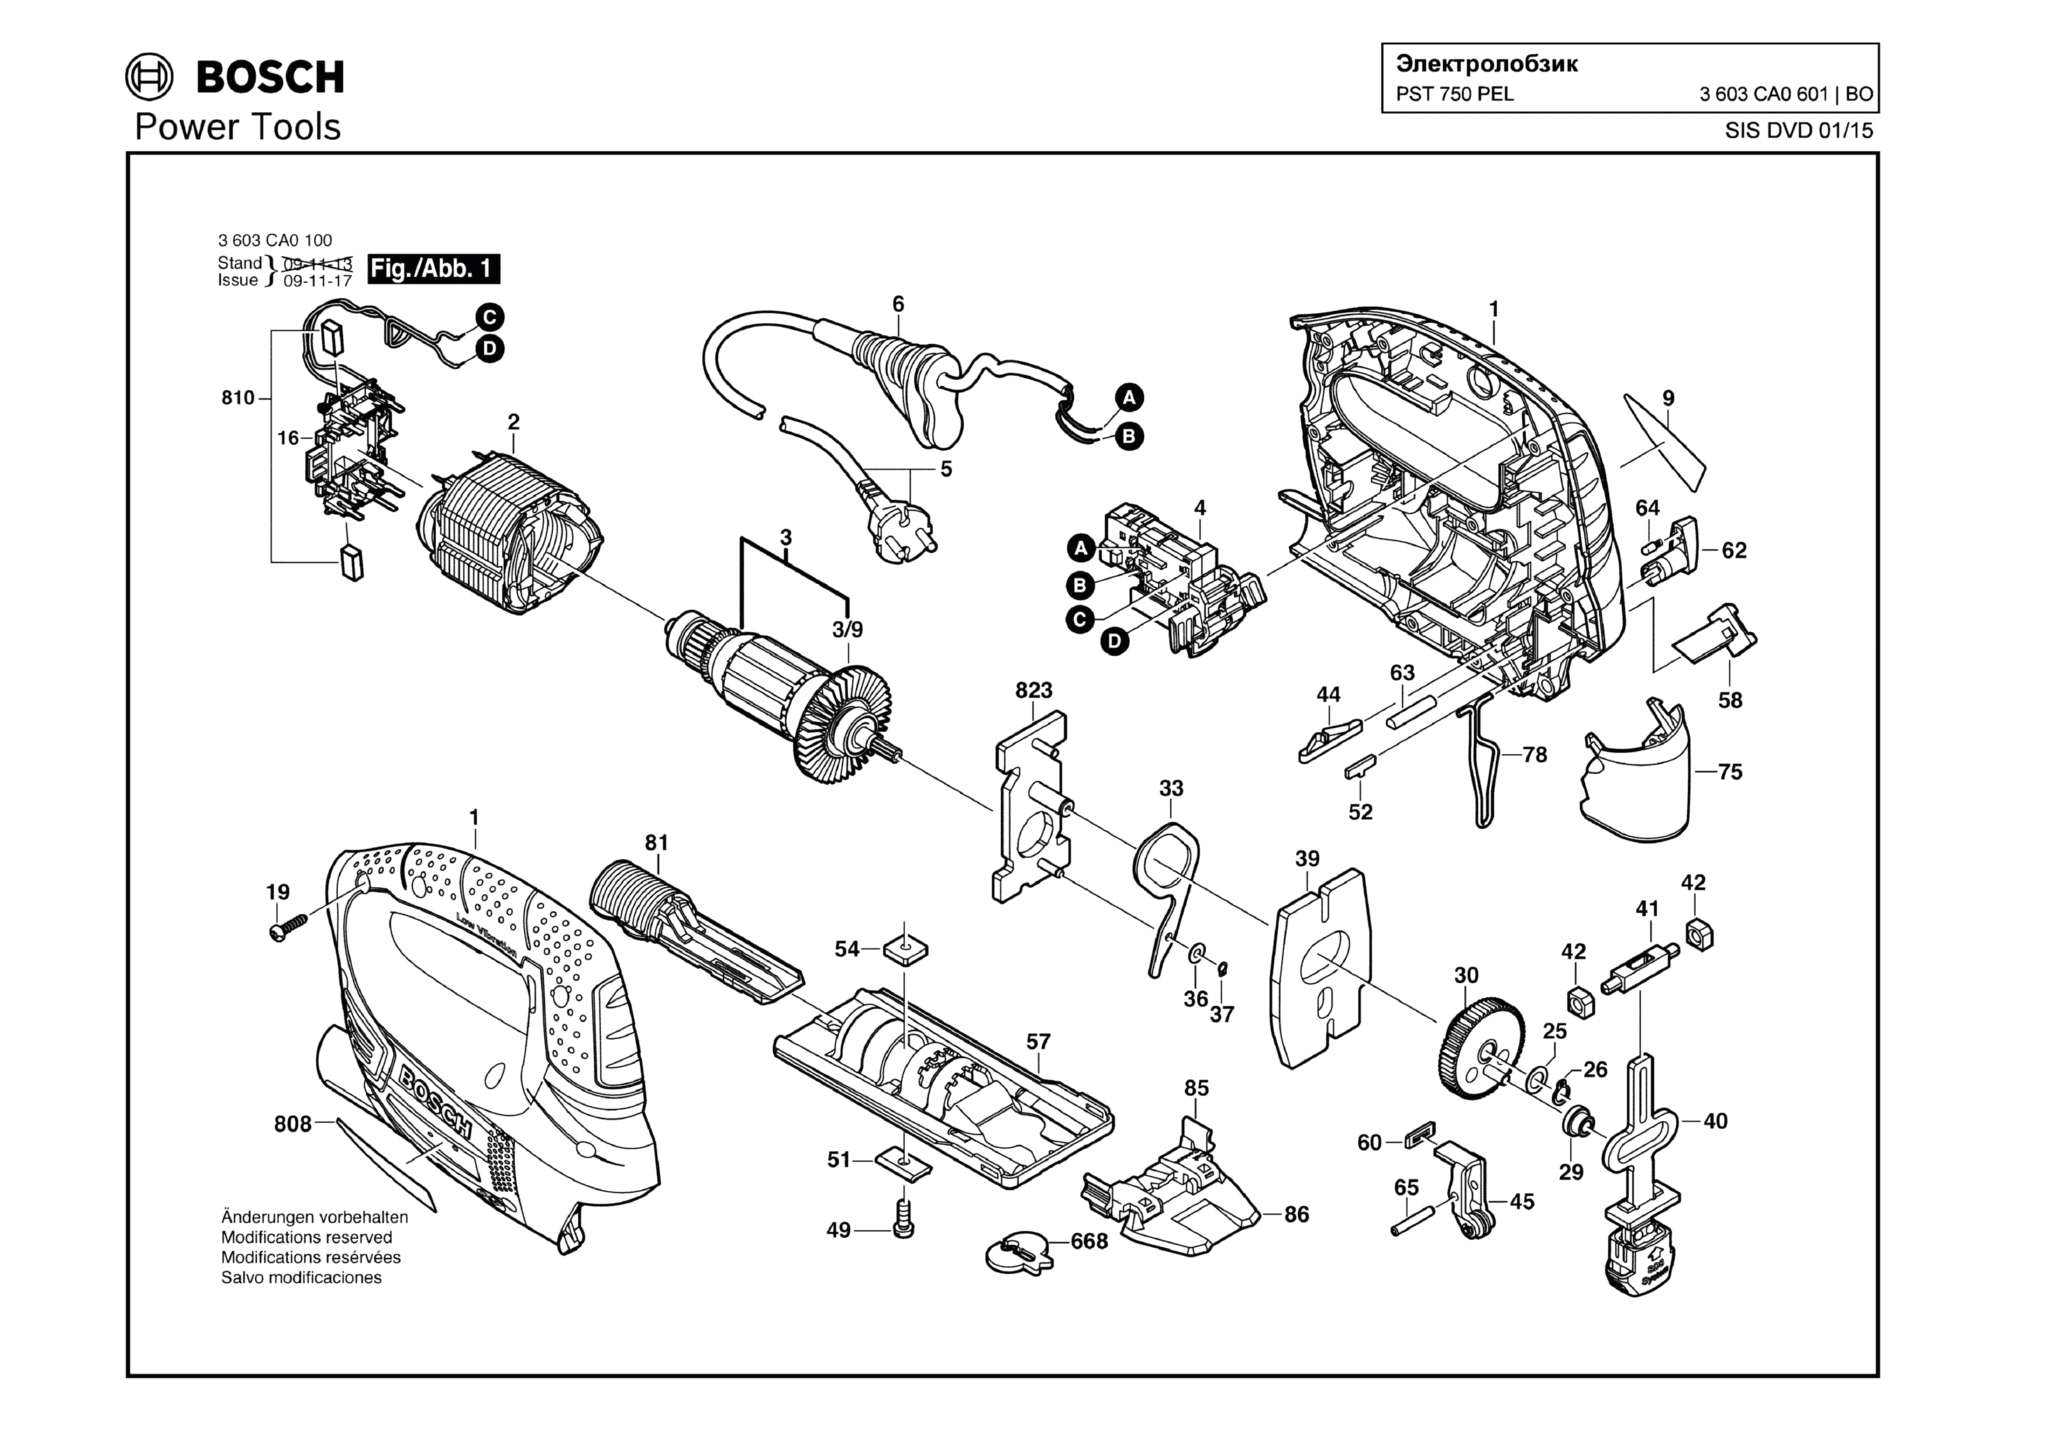 Запчасти, схема и деталировка Bosch PST 750 PEL (ТИП 3603CA0601)